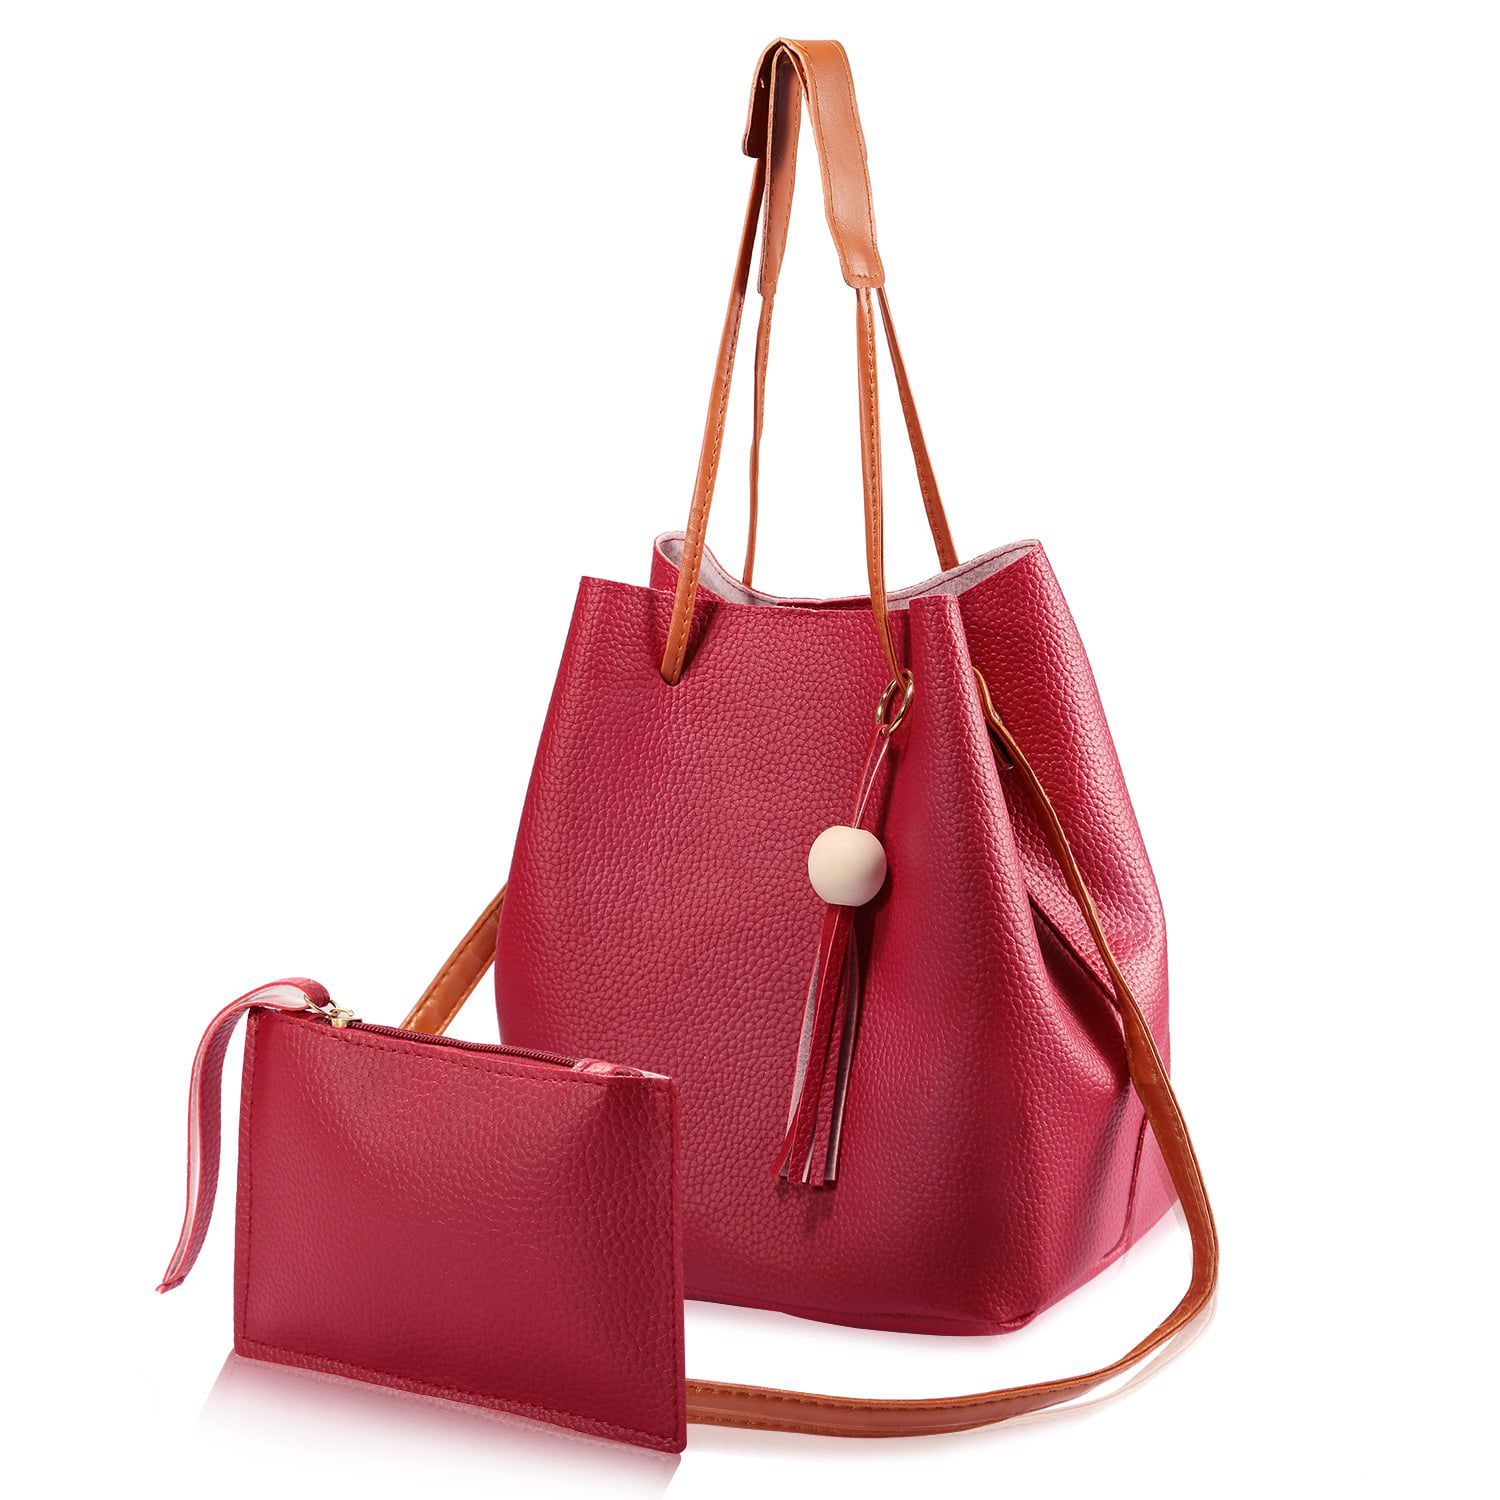 1Set/2Pcs Women Leather Handbags Shoulder Bags Lady Crossbody Bags Clutch Purse - 0